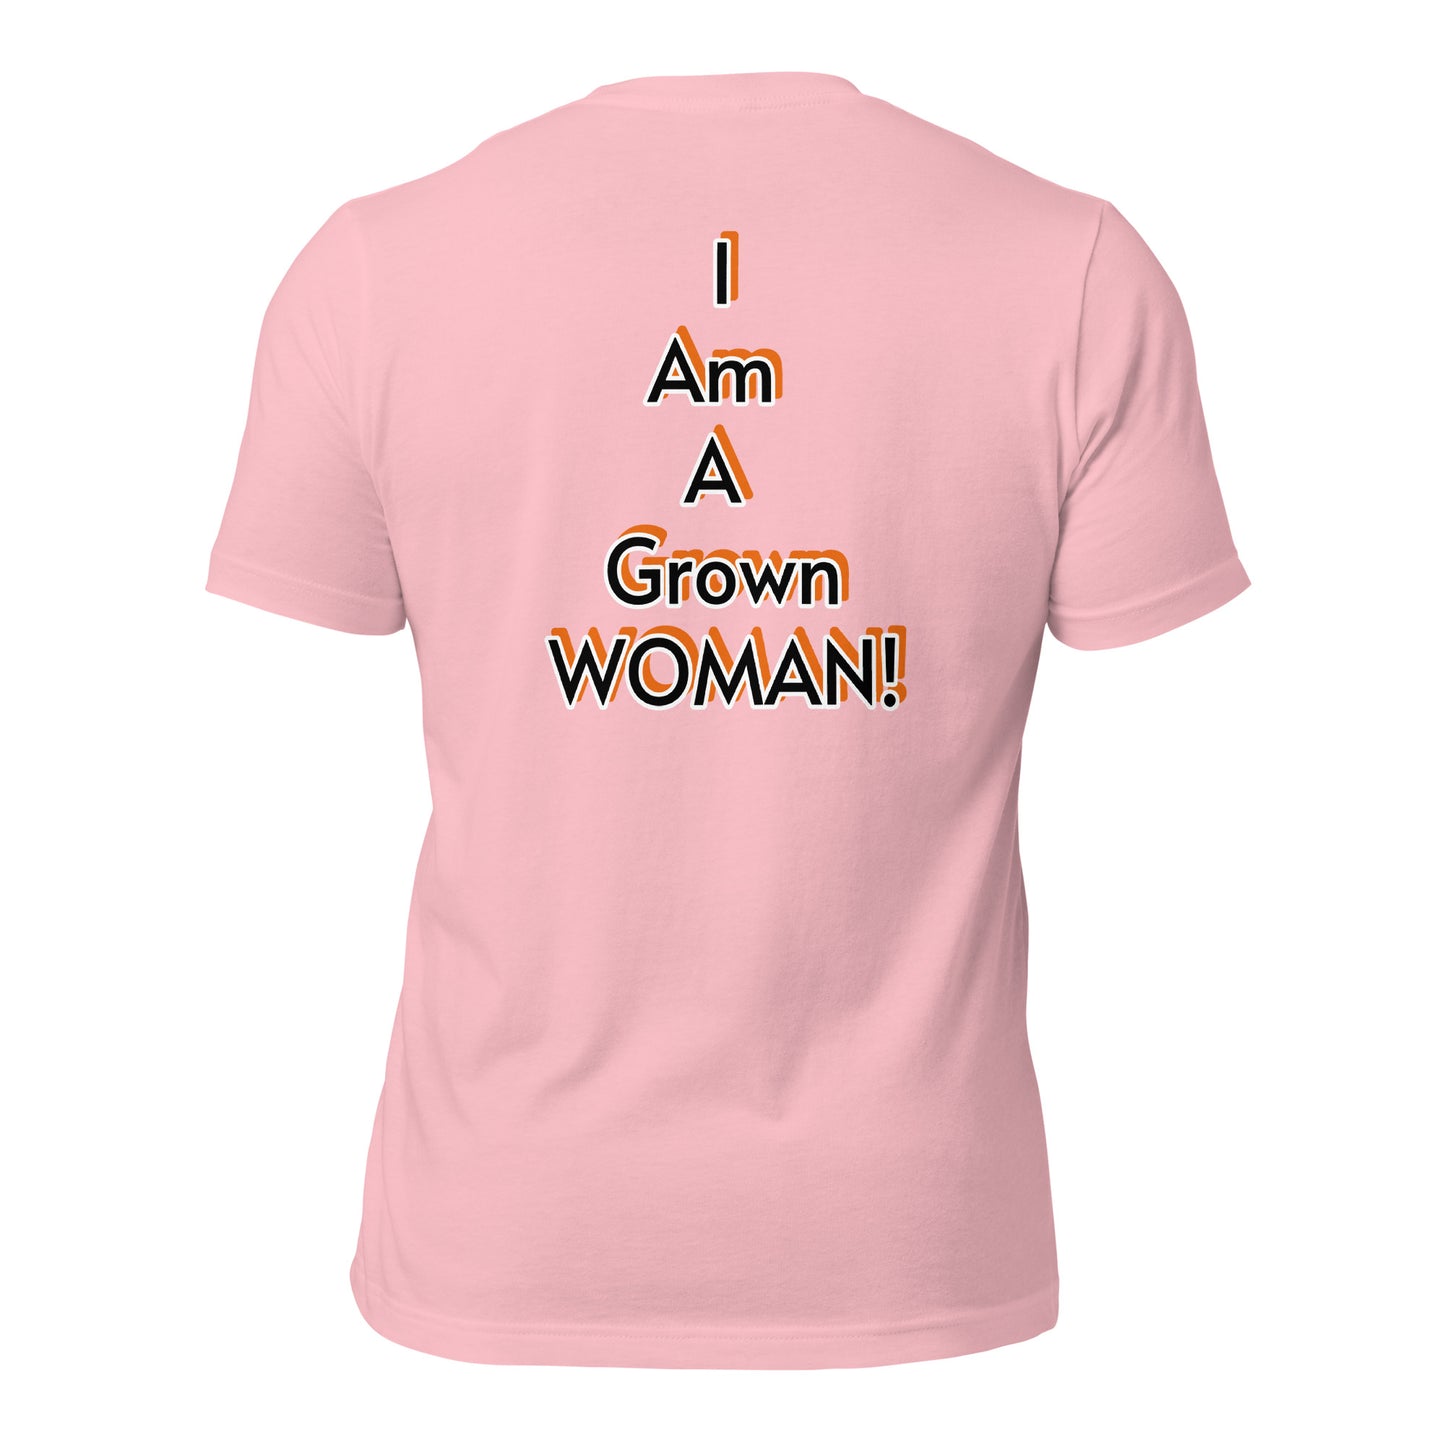 Grown Woman CUSTOM MADE